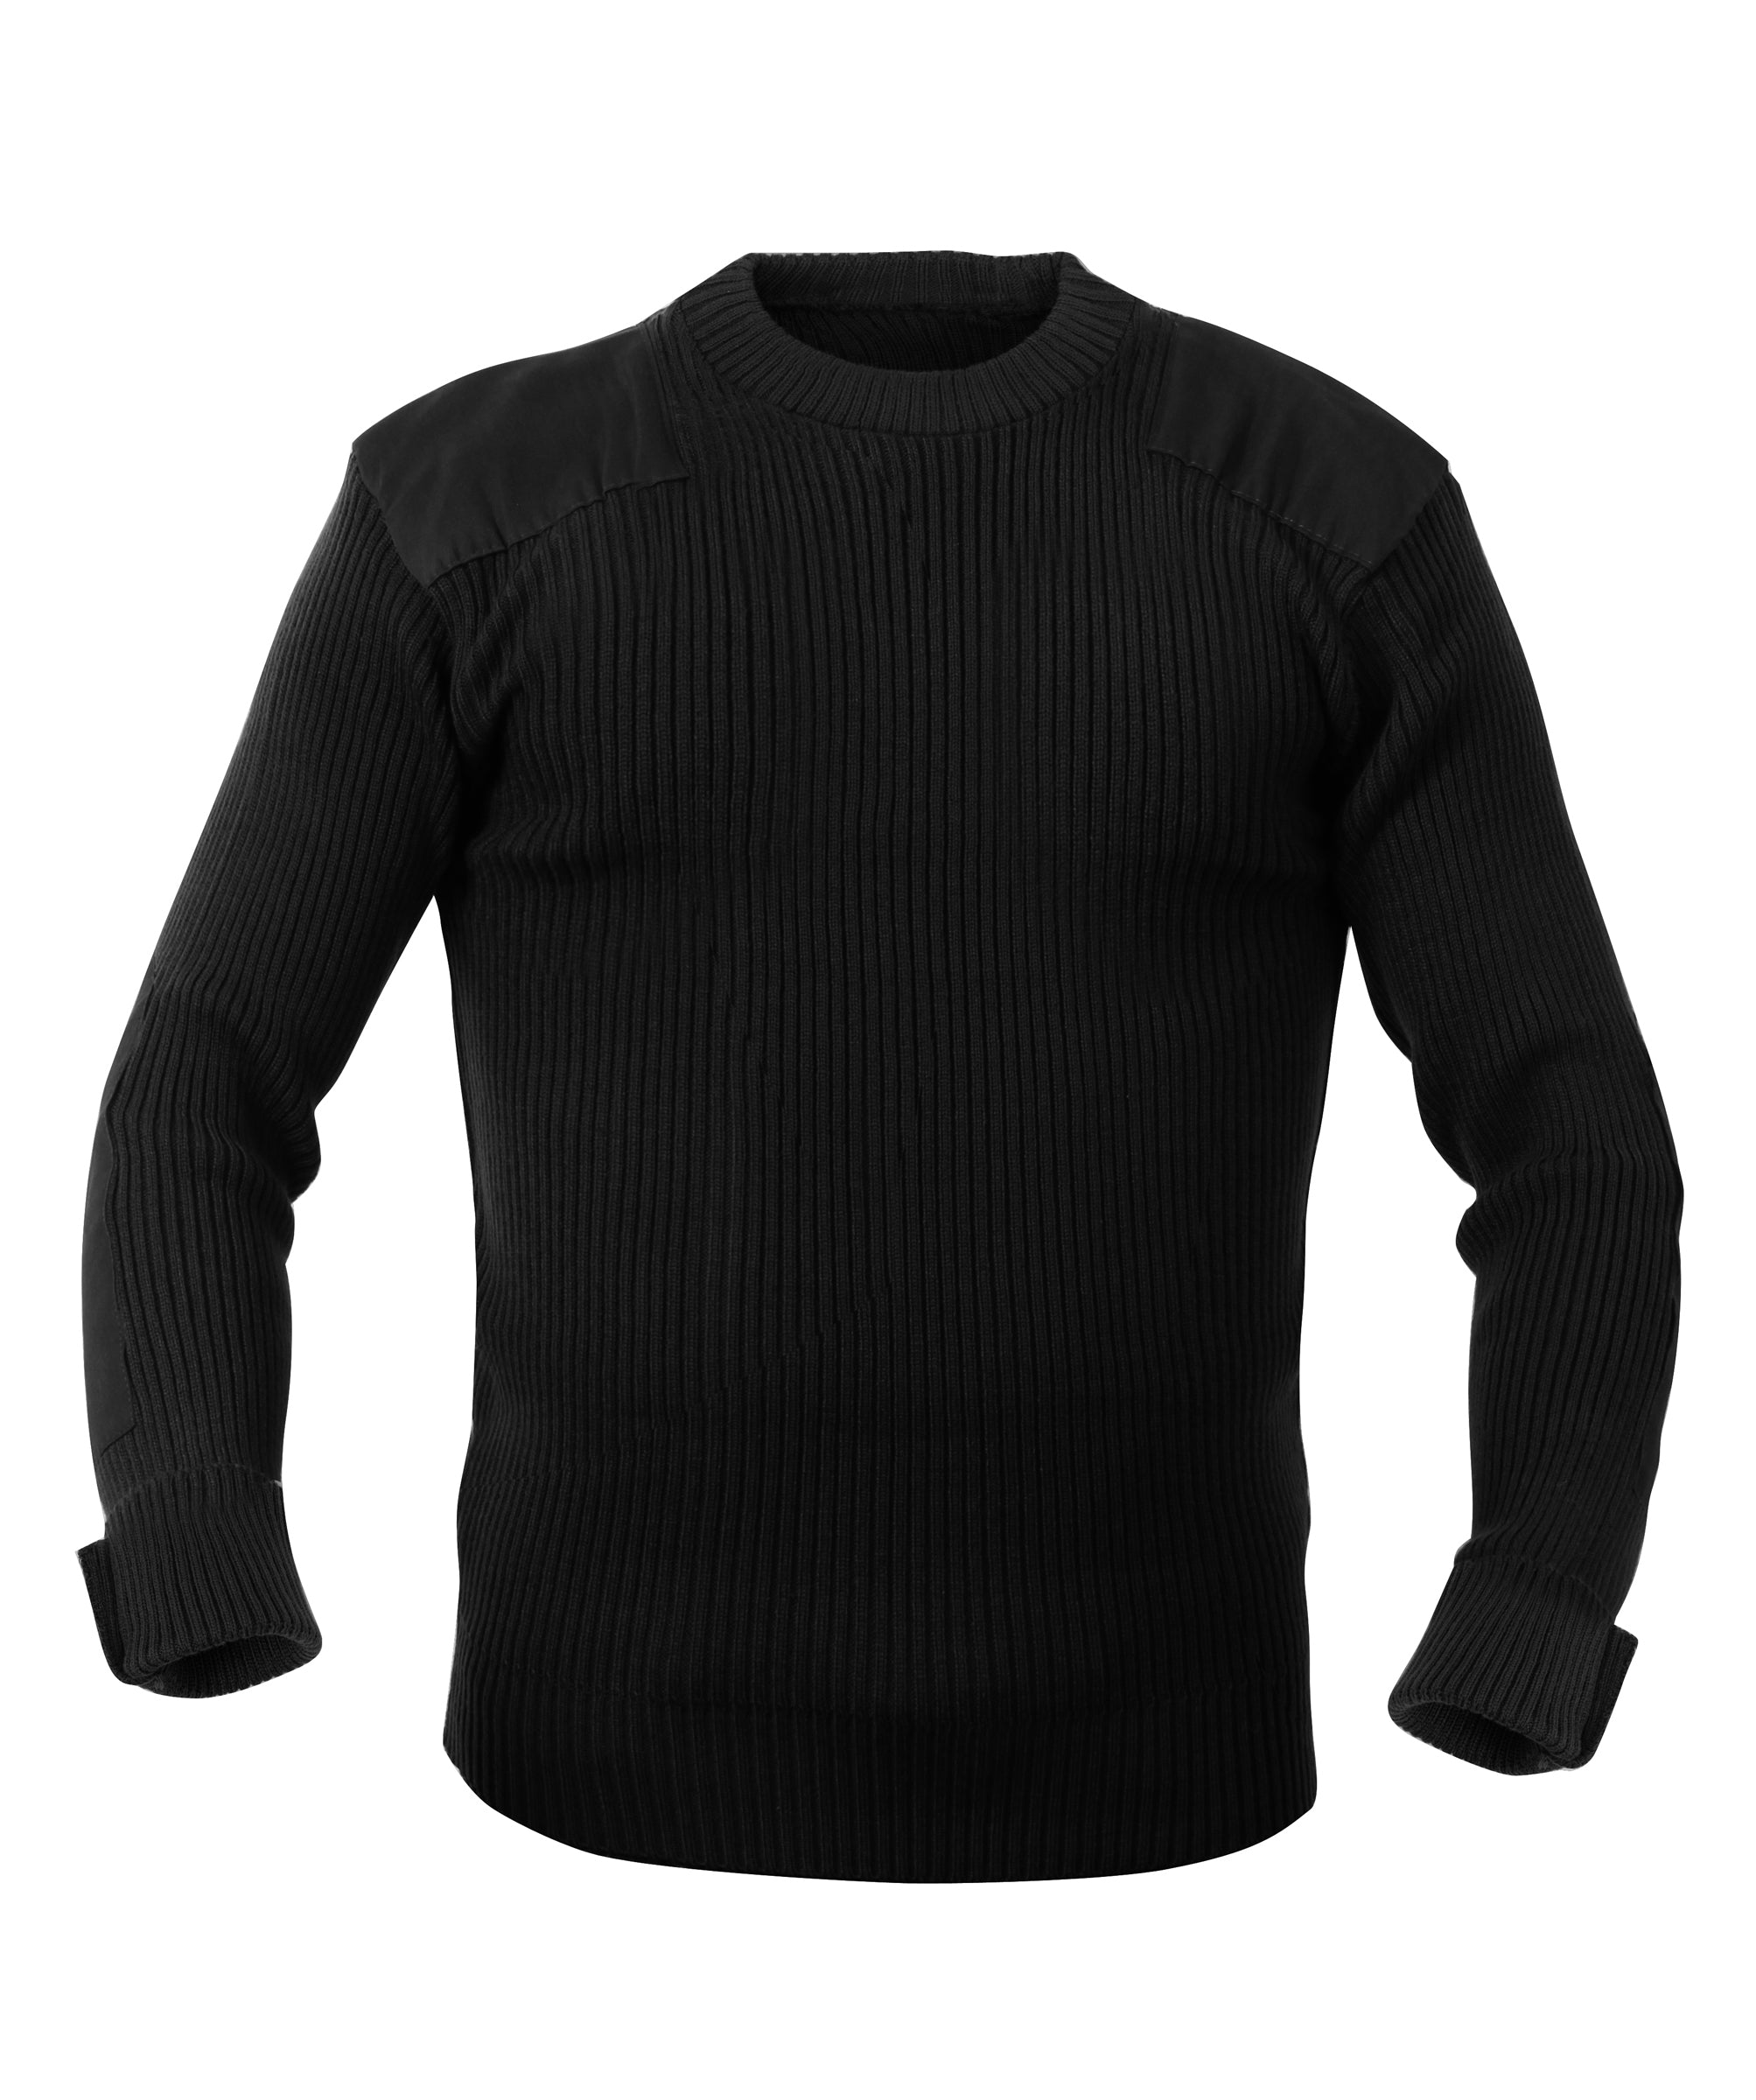 Rothco GI Style Commando Sweater Black (6347)